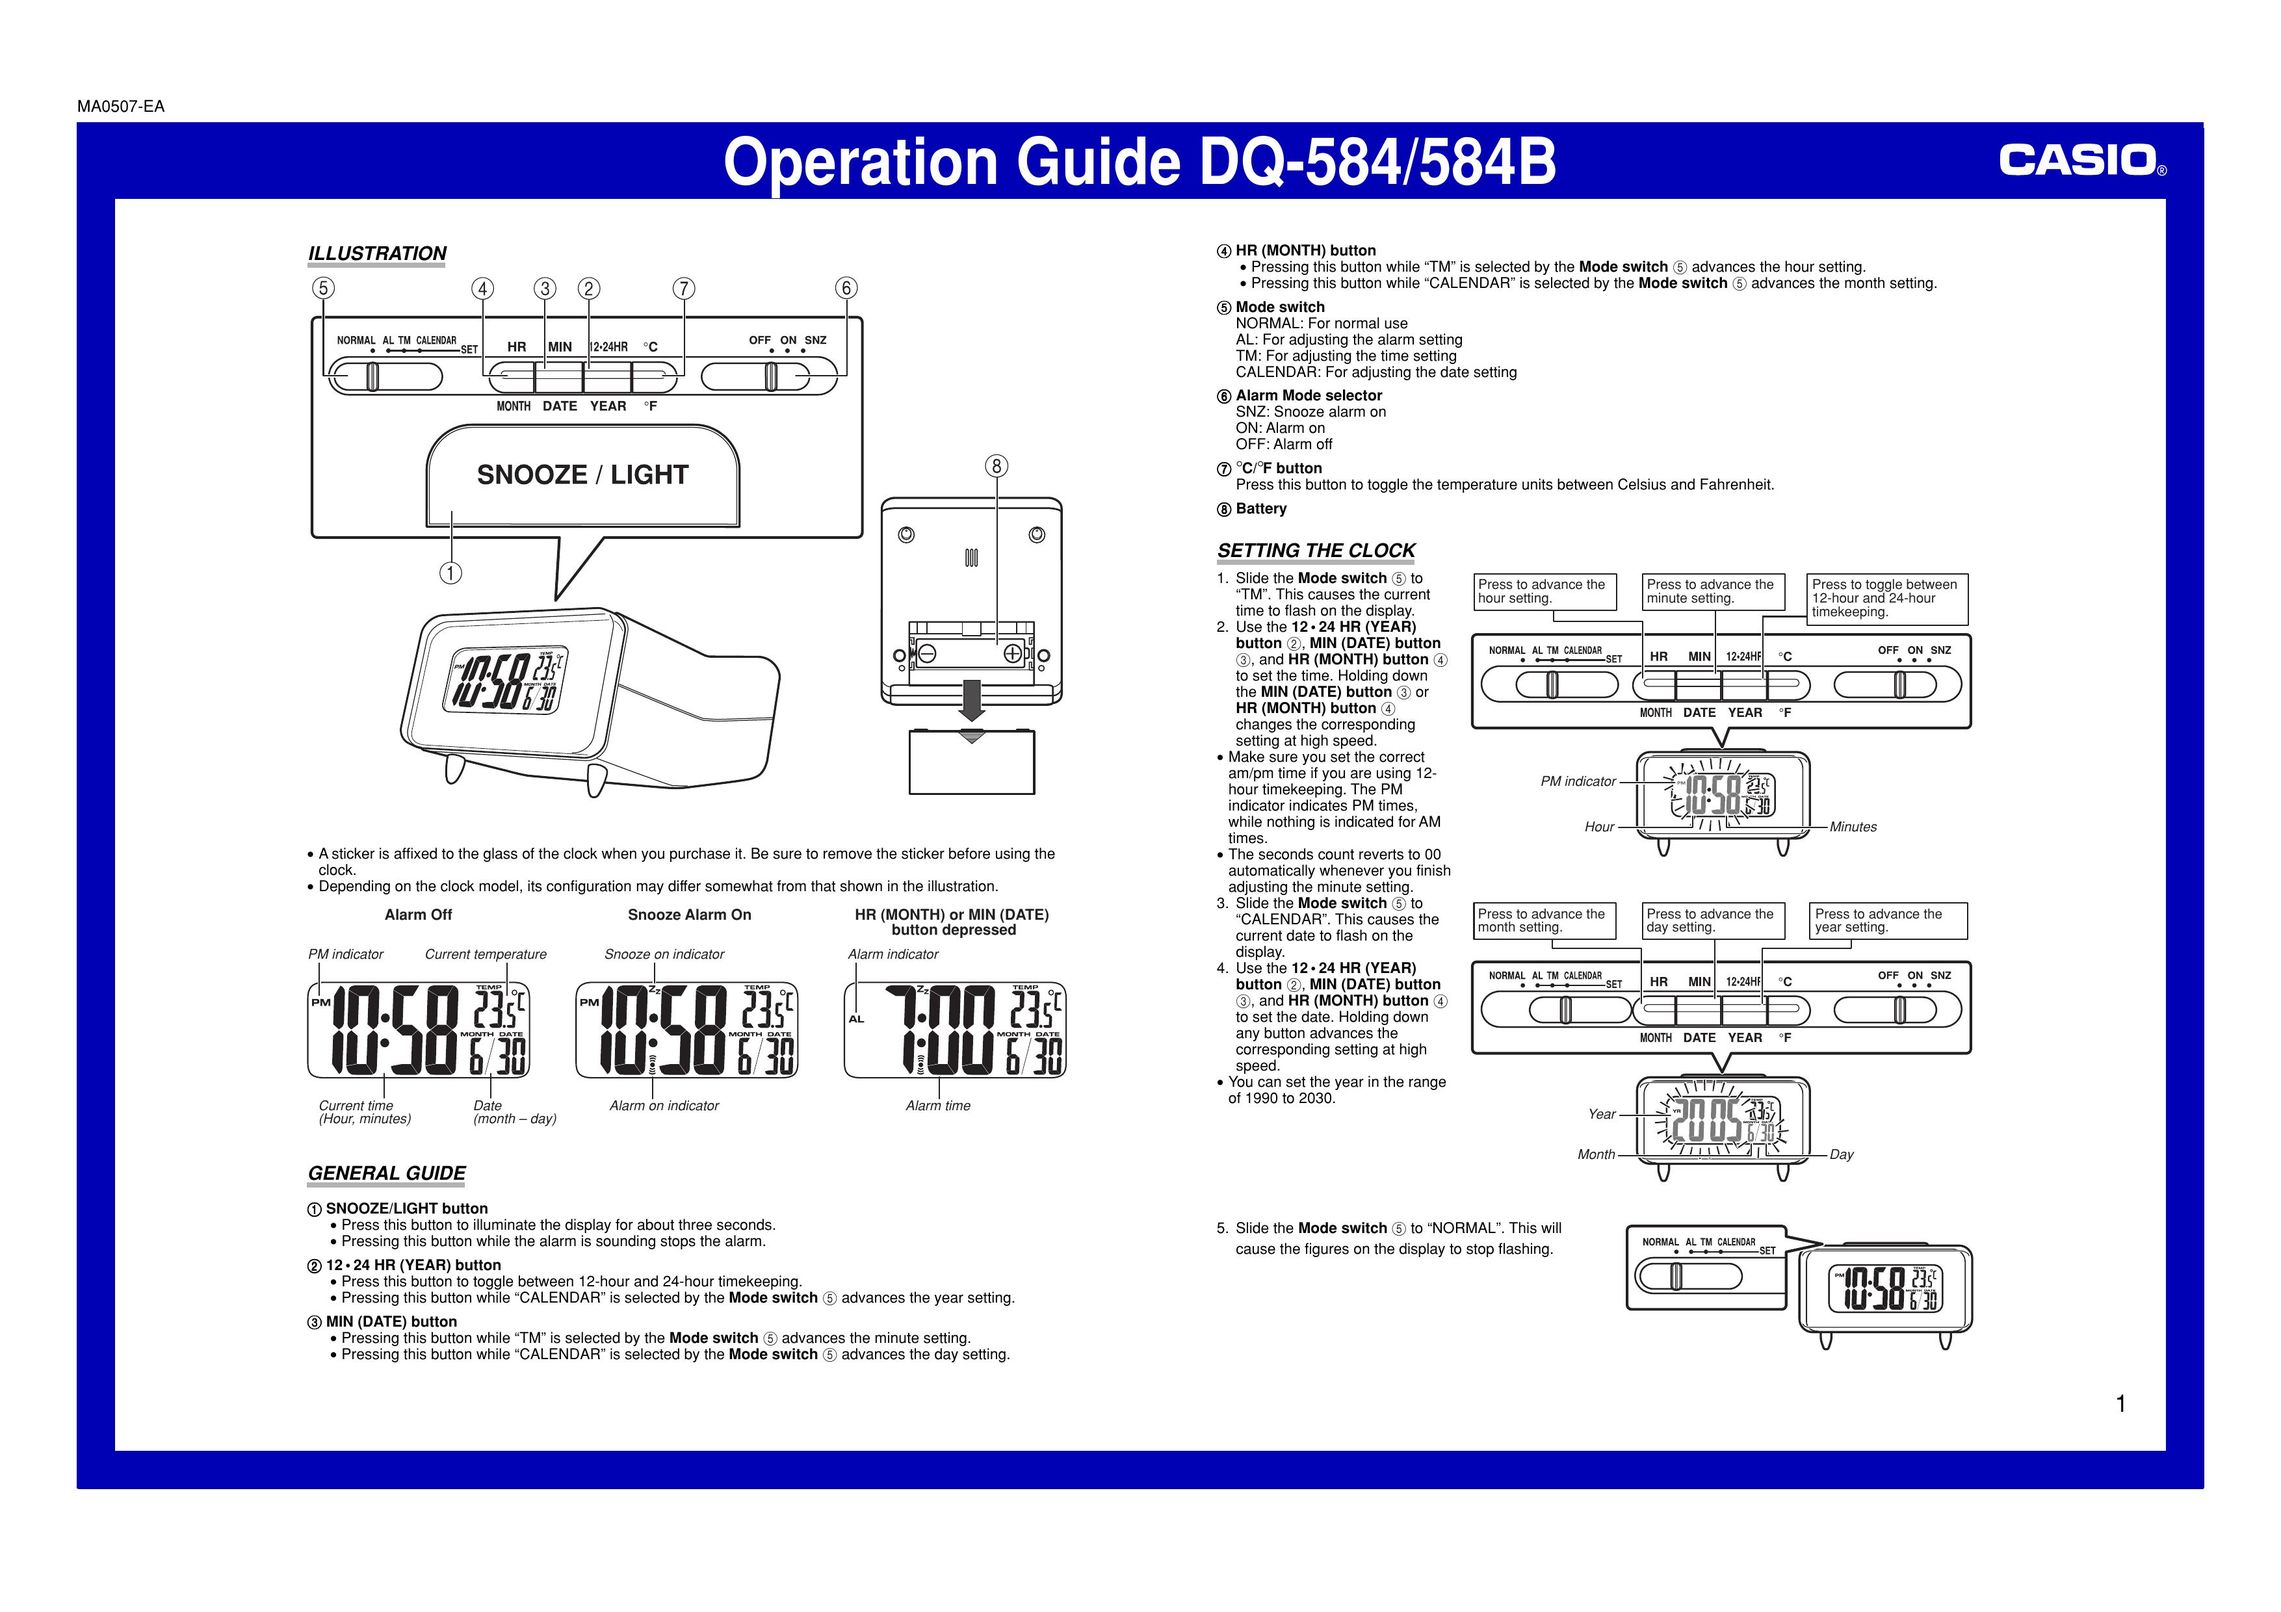 Casio DQ-584 Computer Hardware User Manual